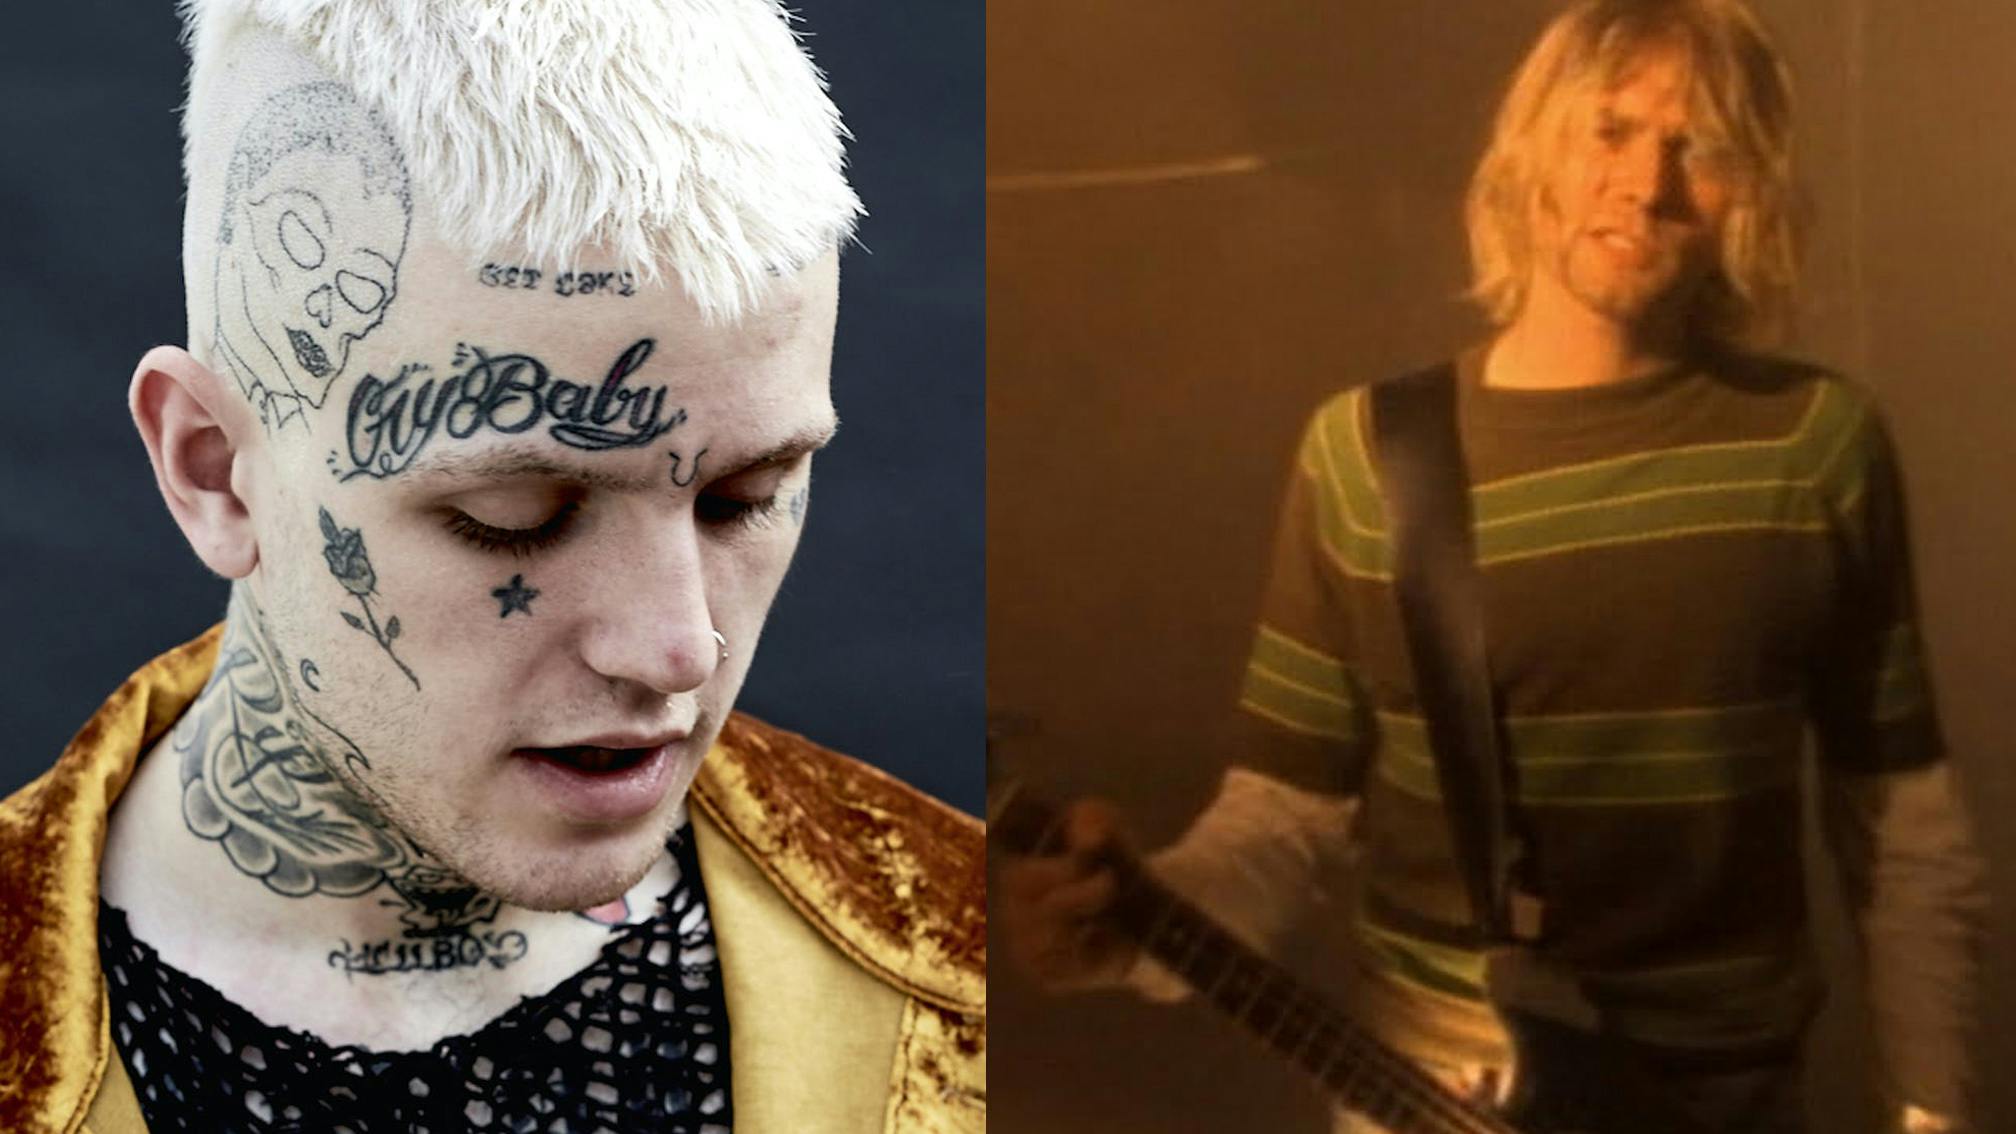 Billy Corgan: Lil Peep was "his generation’s Kurt Cobain"